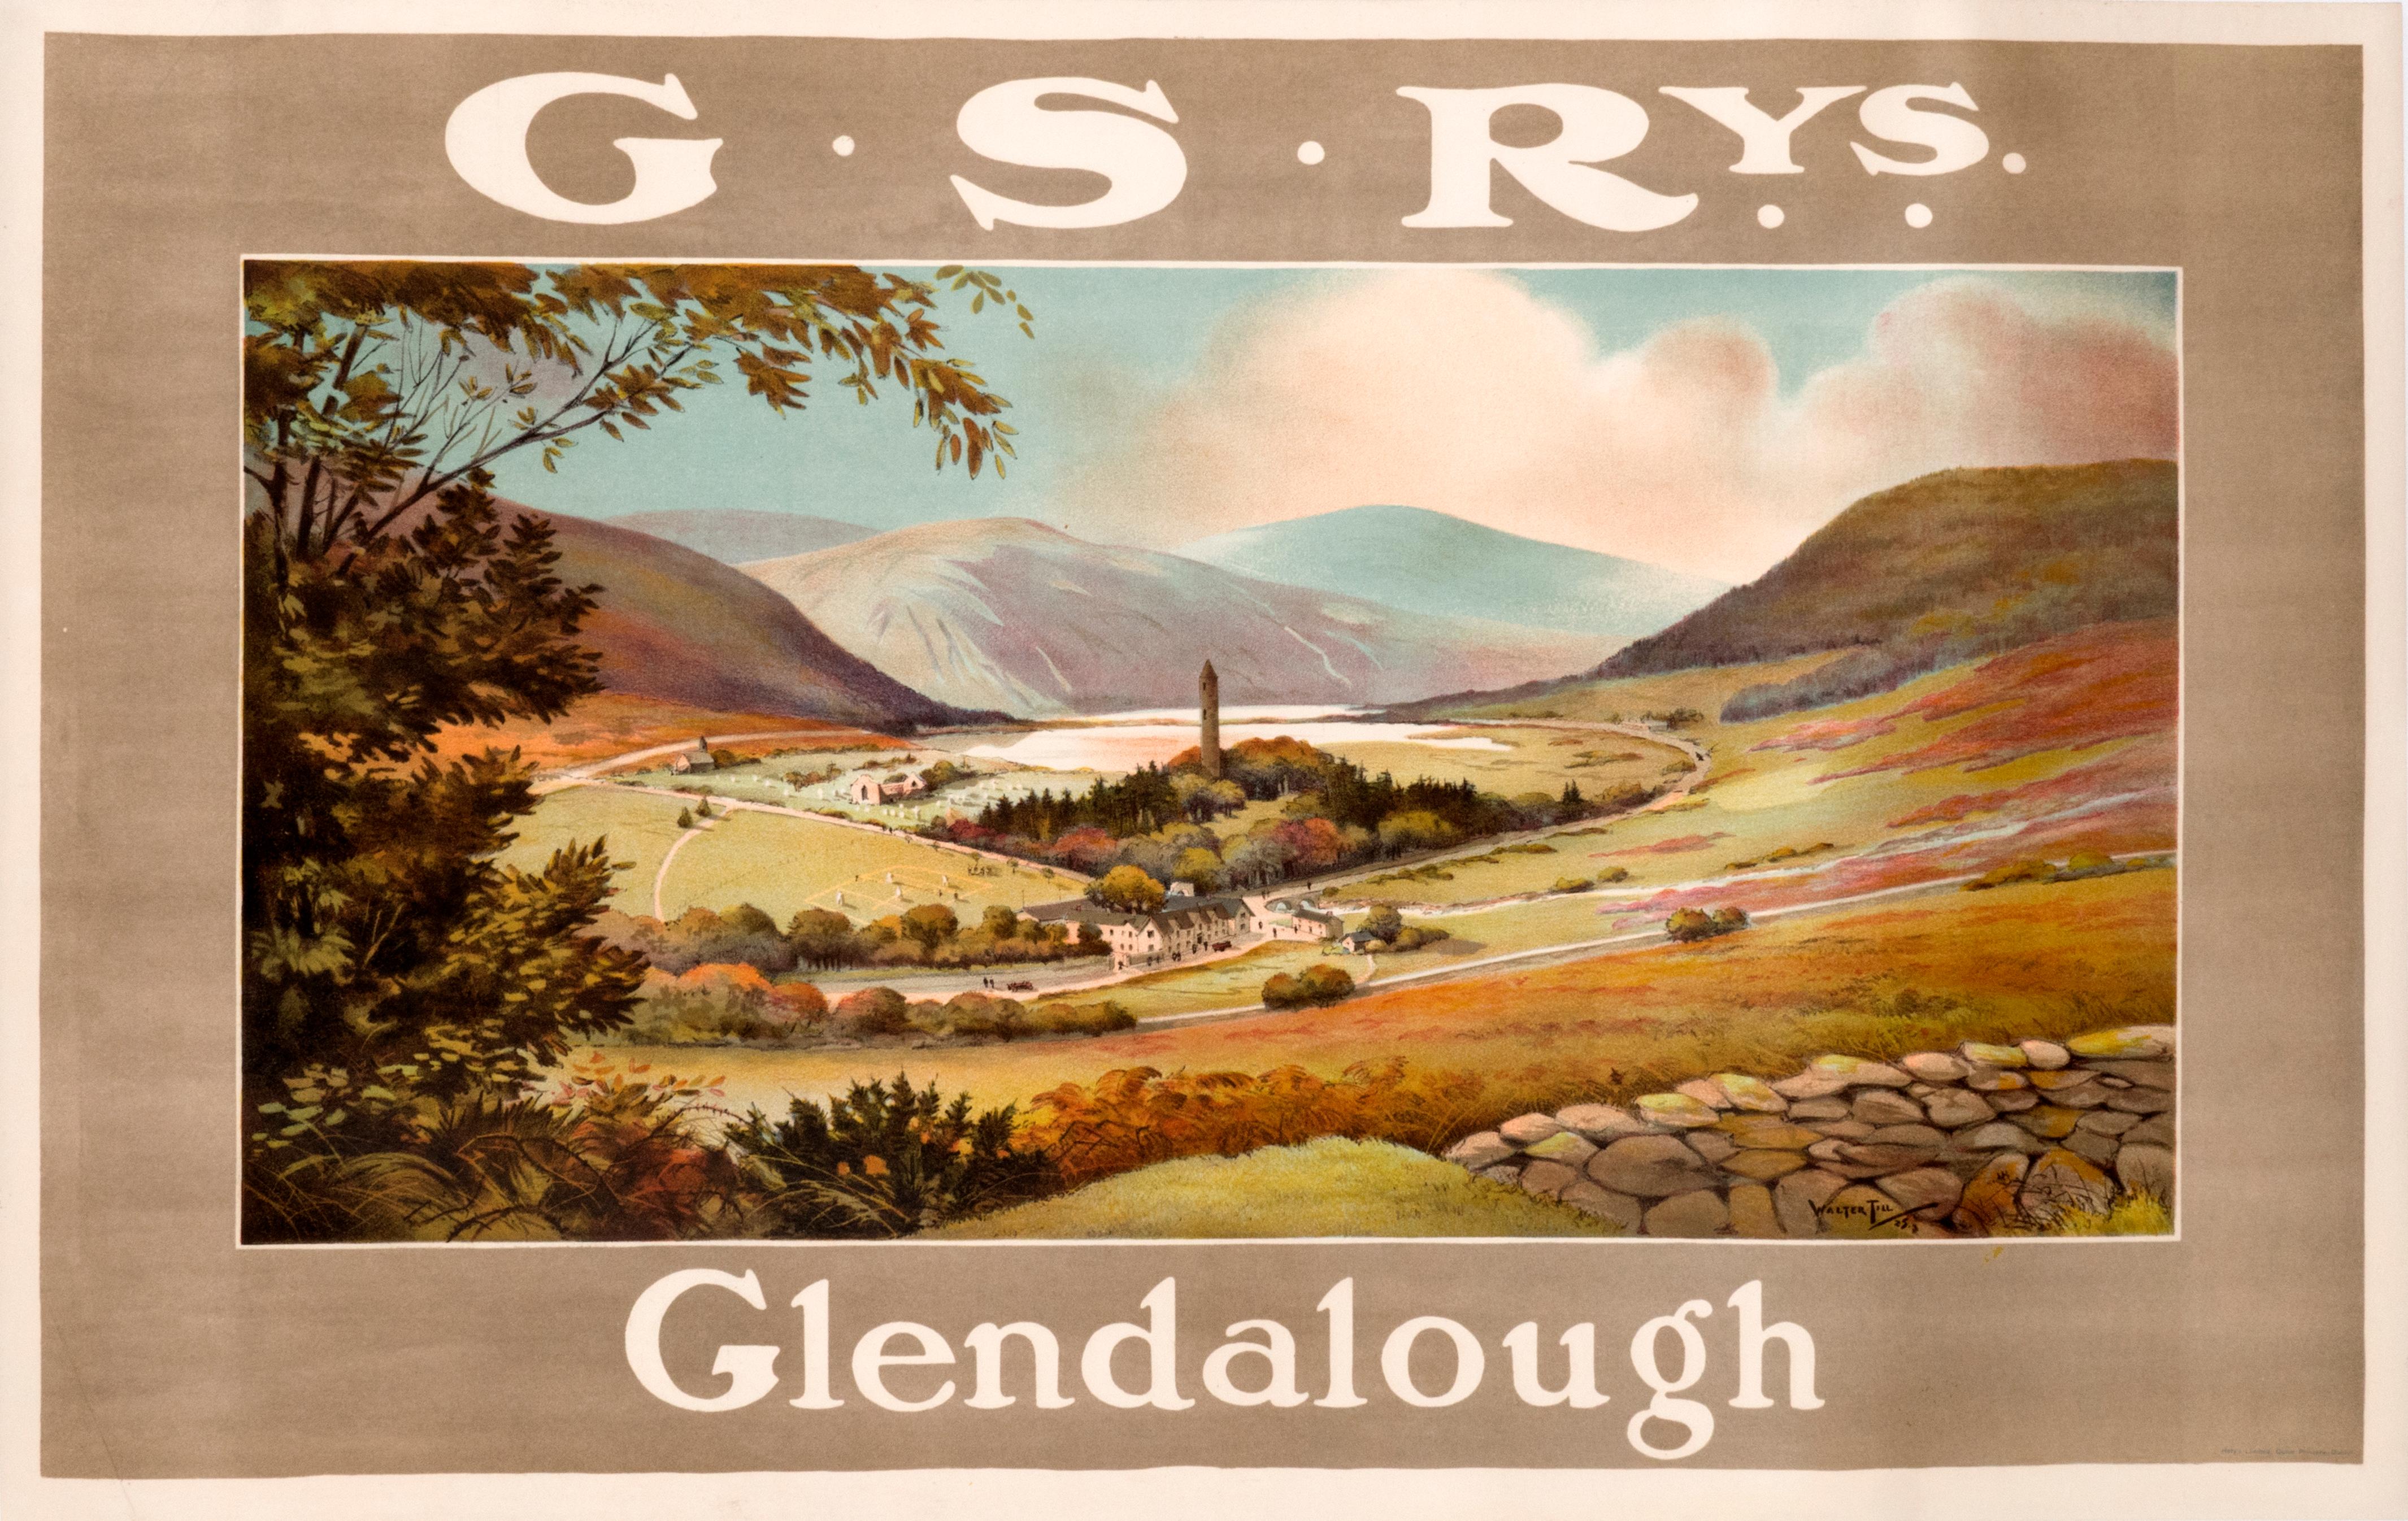 Walter Till Landscape Print - "Glendalough - Great Southern Railways" Original Vintage Ireland Poster